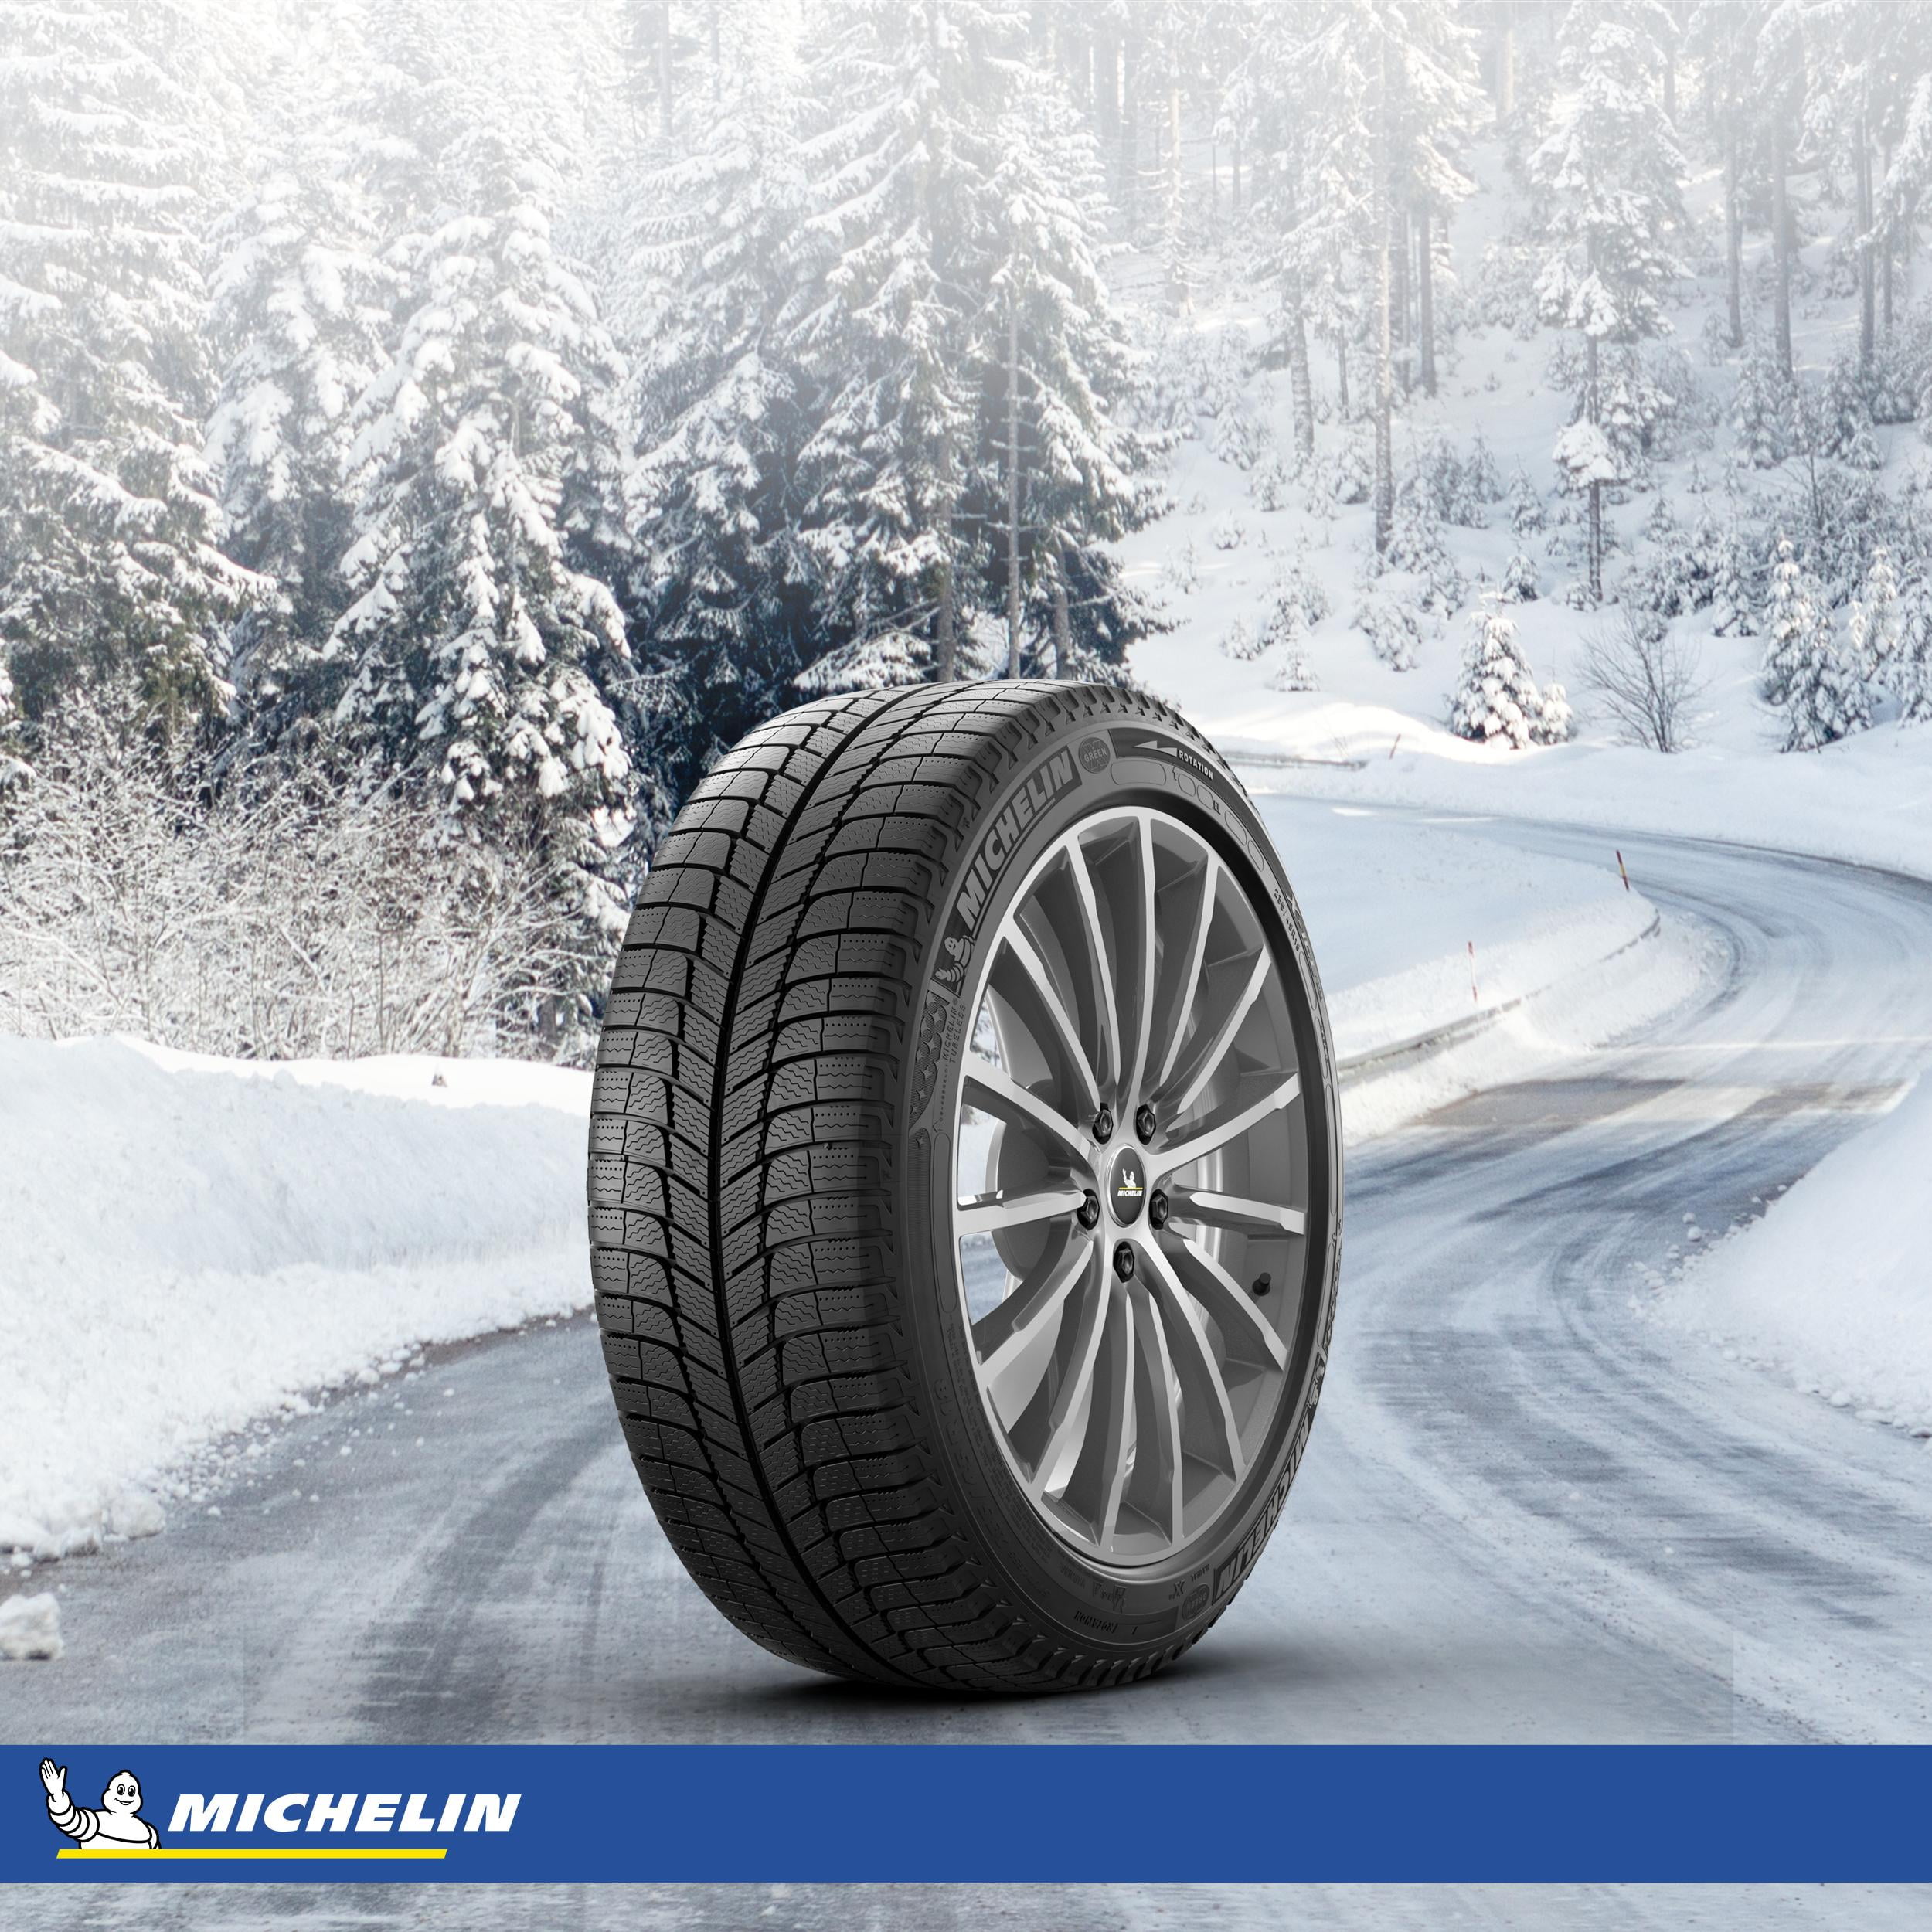 Michelin X-Ice Xi3 245/45R18 100 H Tire